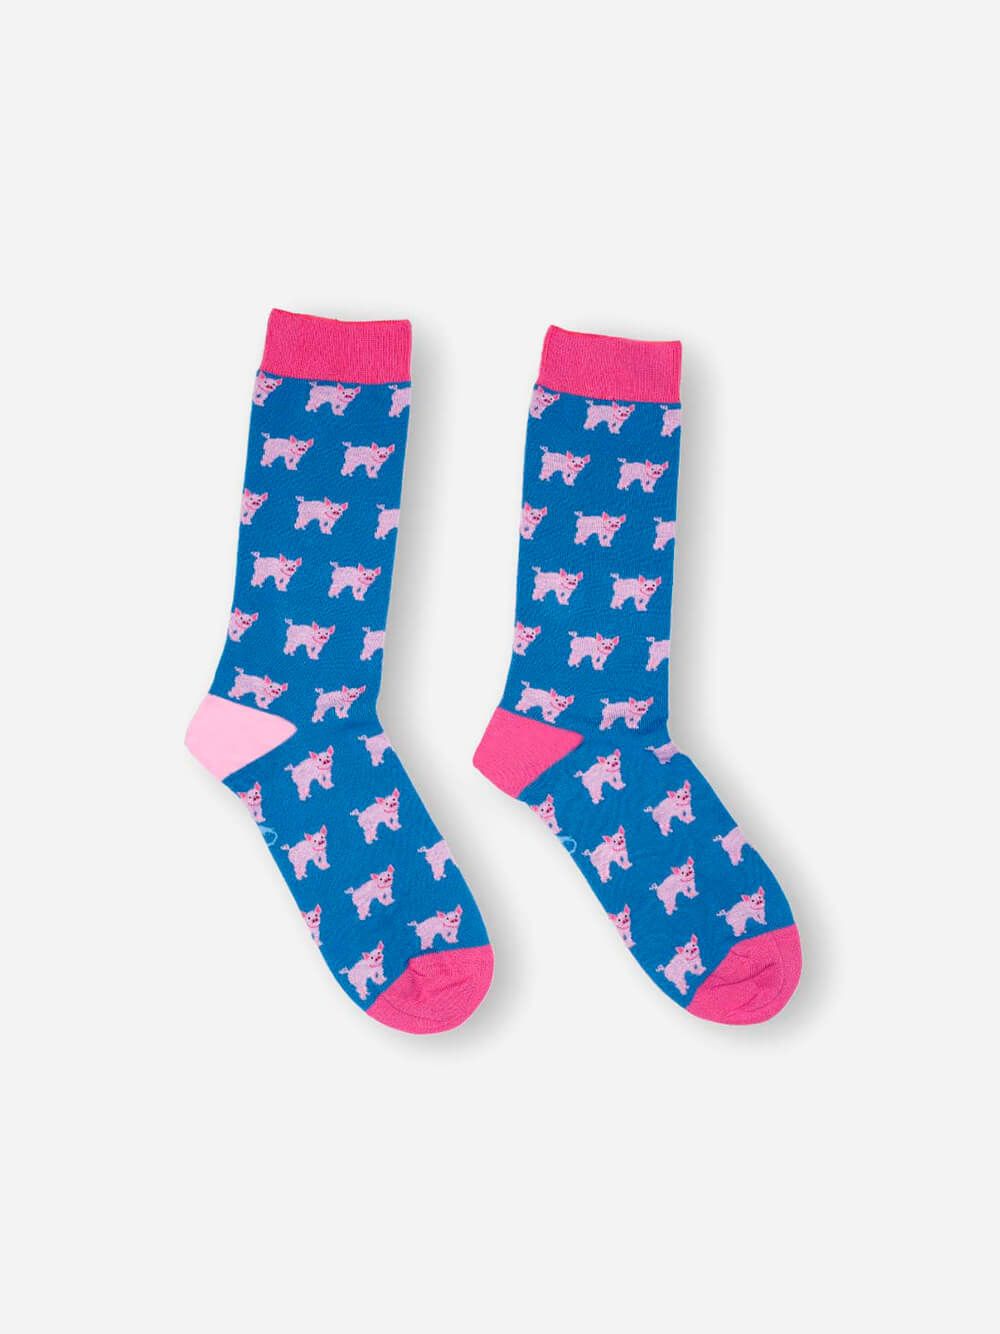 Piglets Socks | Lolo Carolo